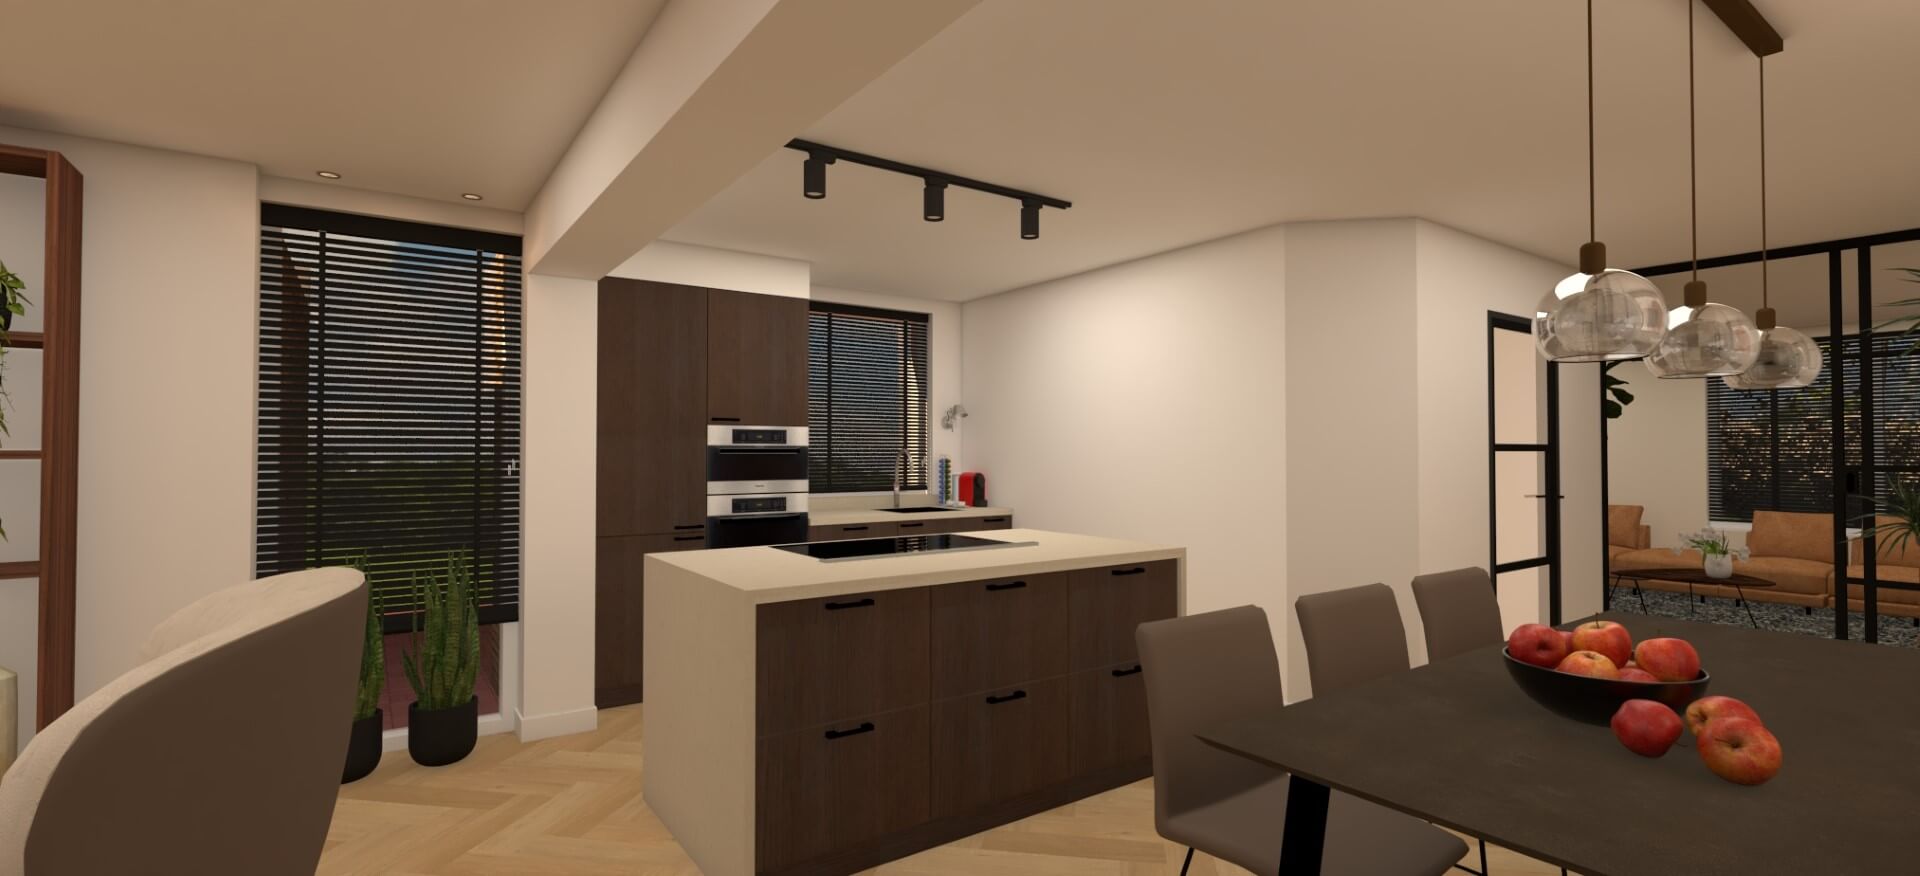 3D impressie verbouwingsontwerp, keukenontwerp en interieurontwerp 2-onder-1-kap Hoeven - door Huis & Interieur